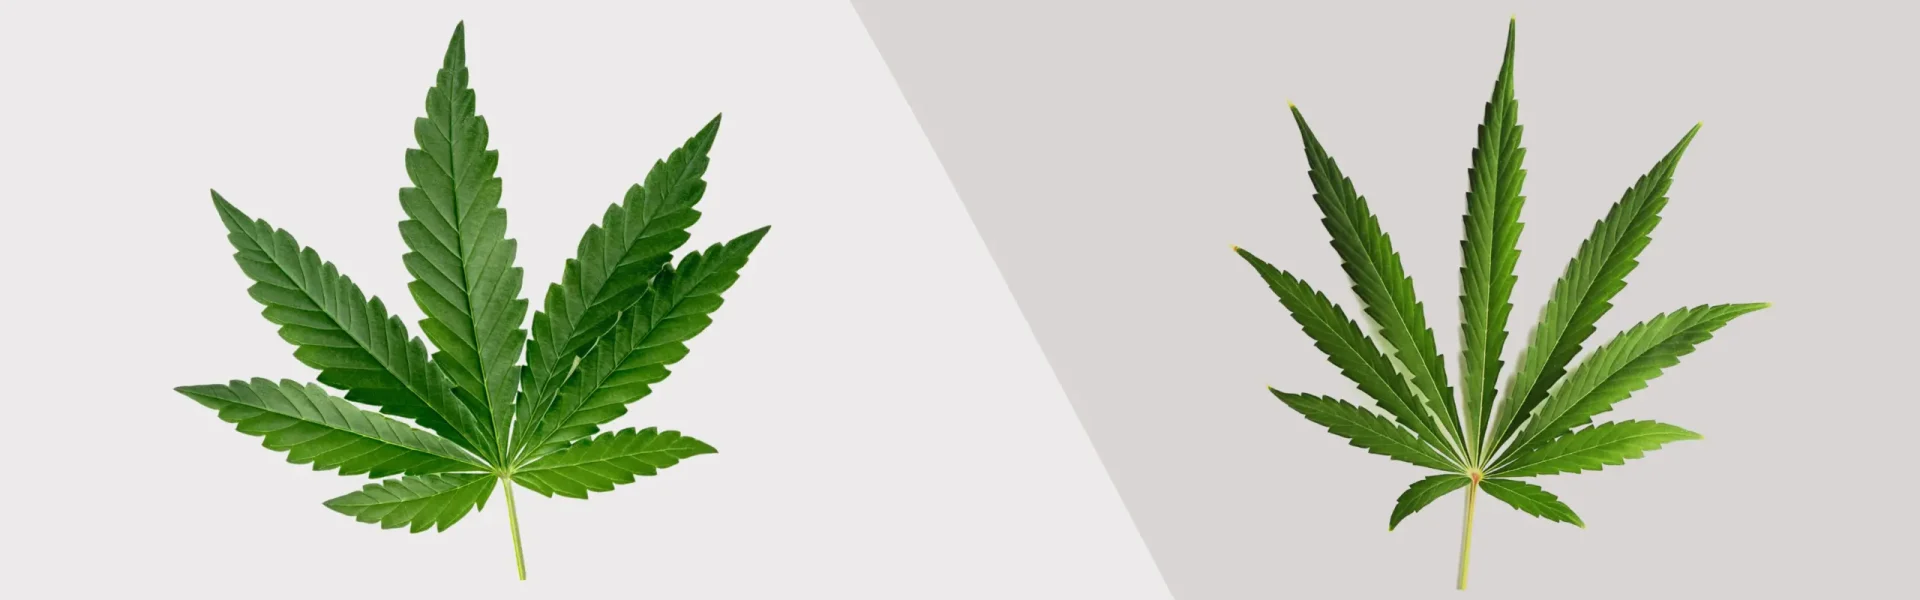 cannabis-bush-bright-light-with-white-background-medicinal-marijuana-leaves-jack-herer-variety-are-hybrid-sativa-indica (3)